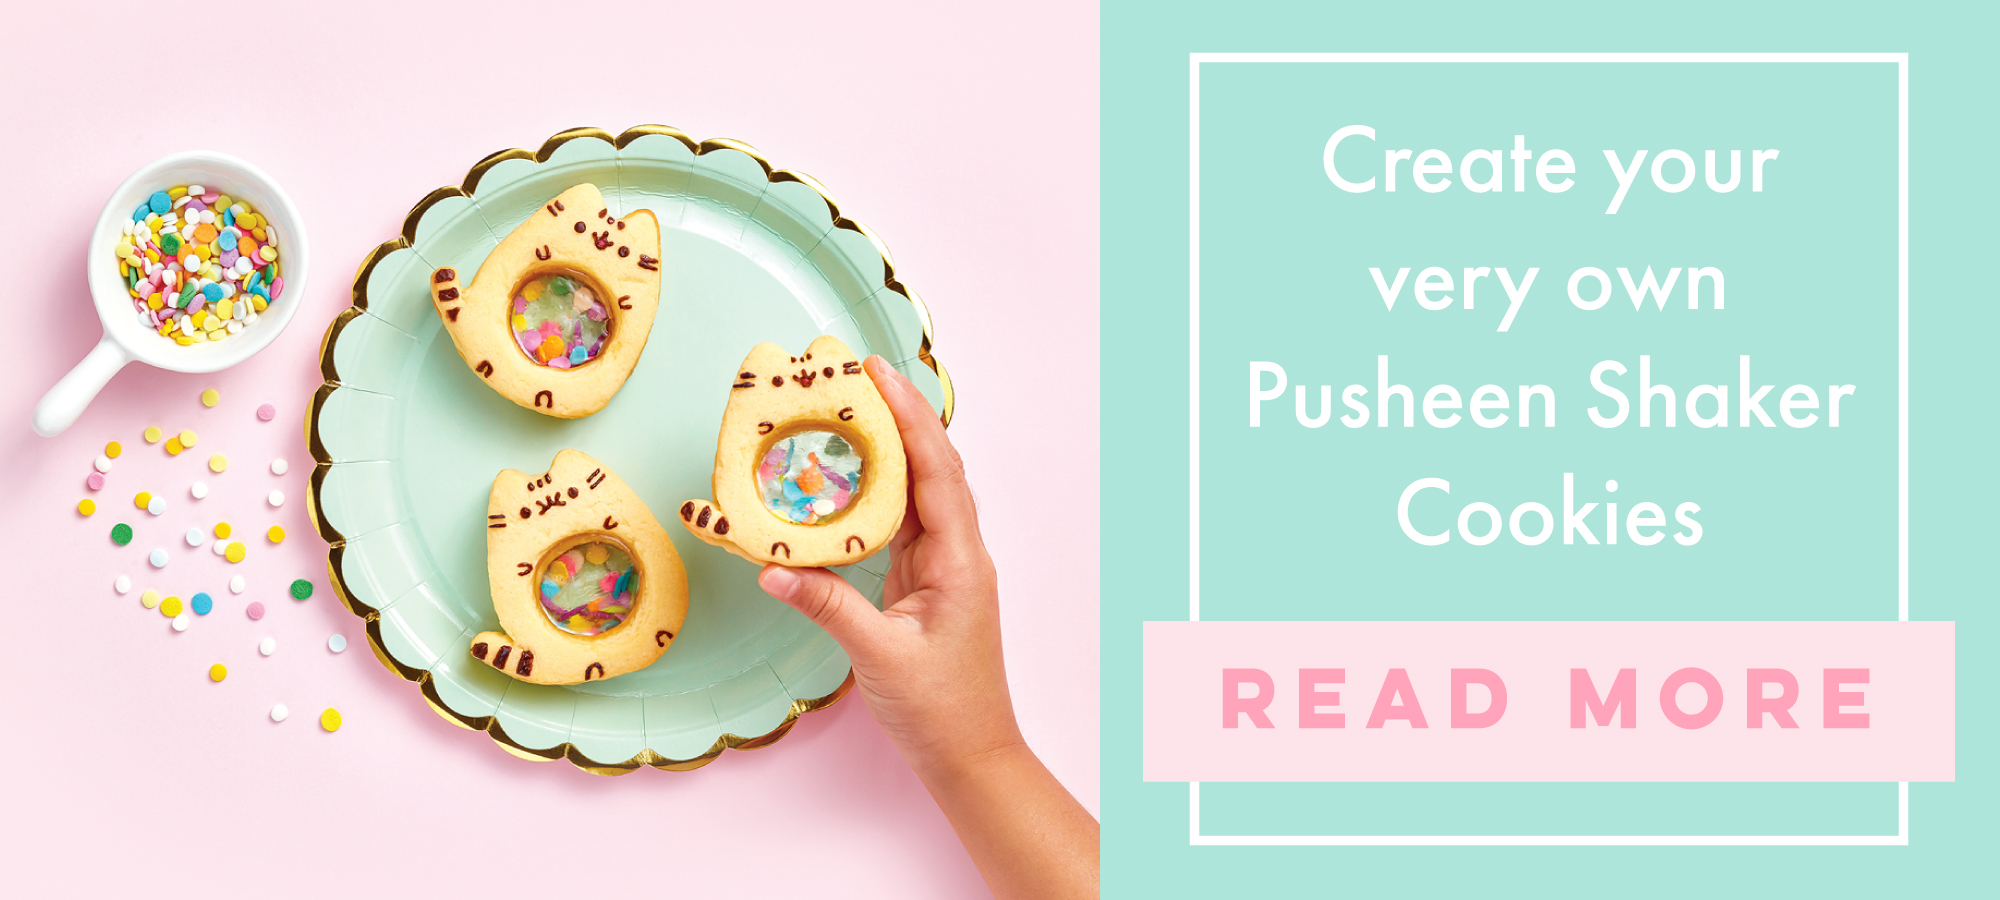 Create your very own Pusheen Shaker Cookies